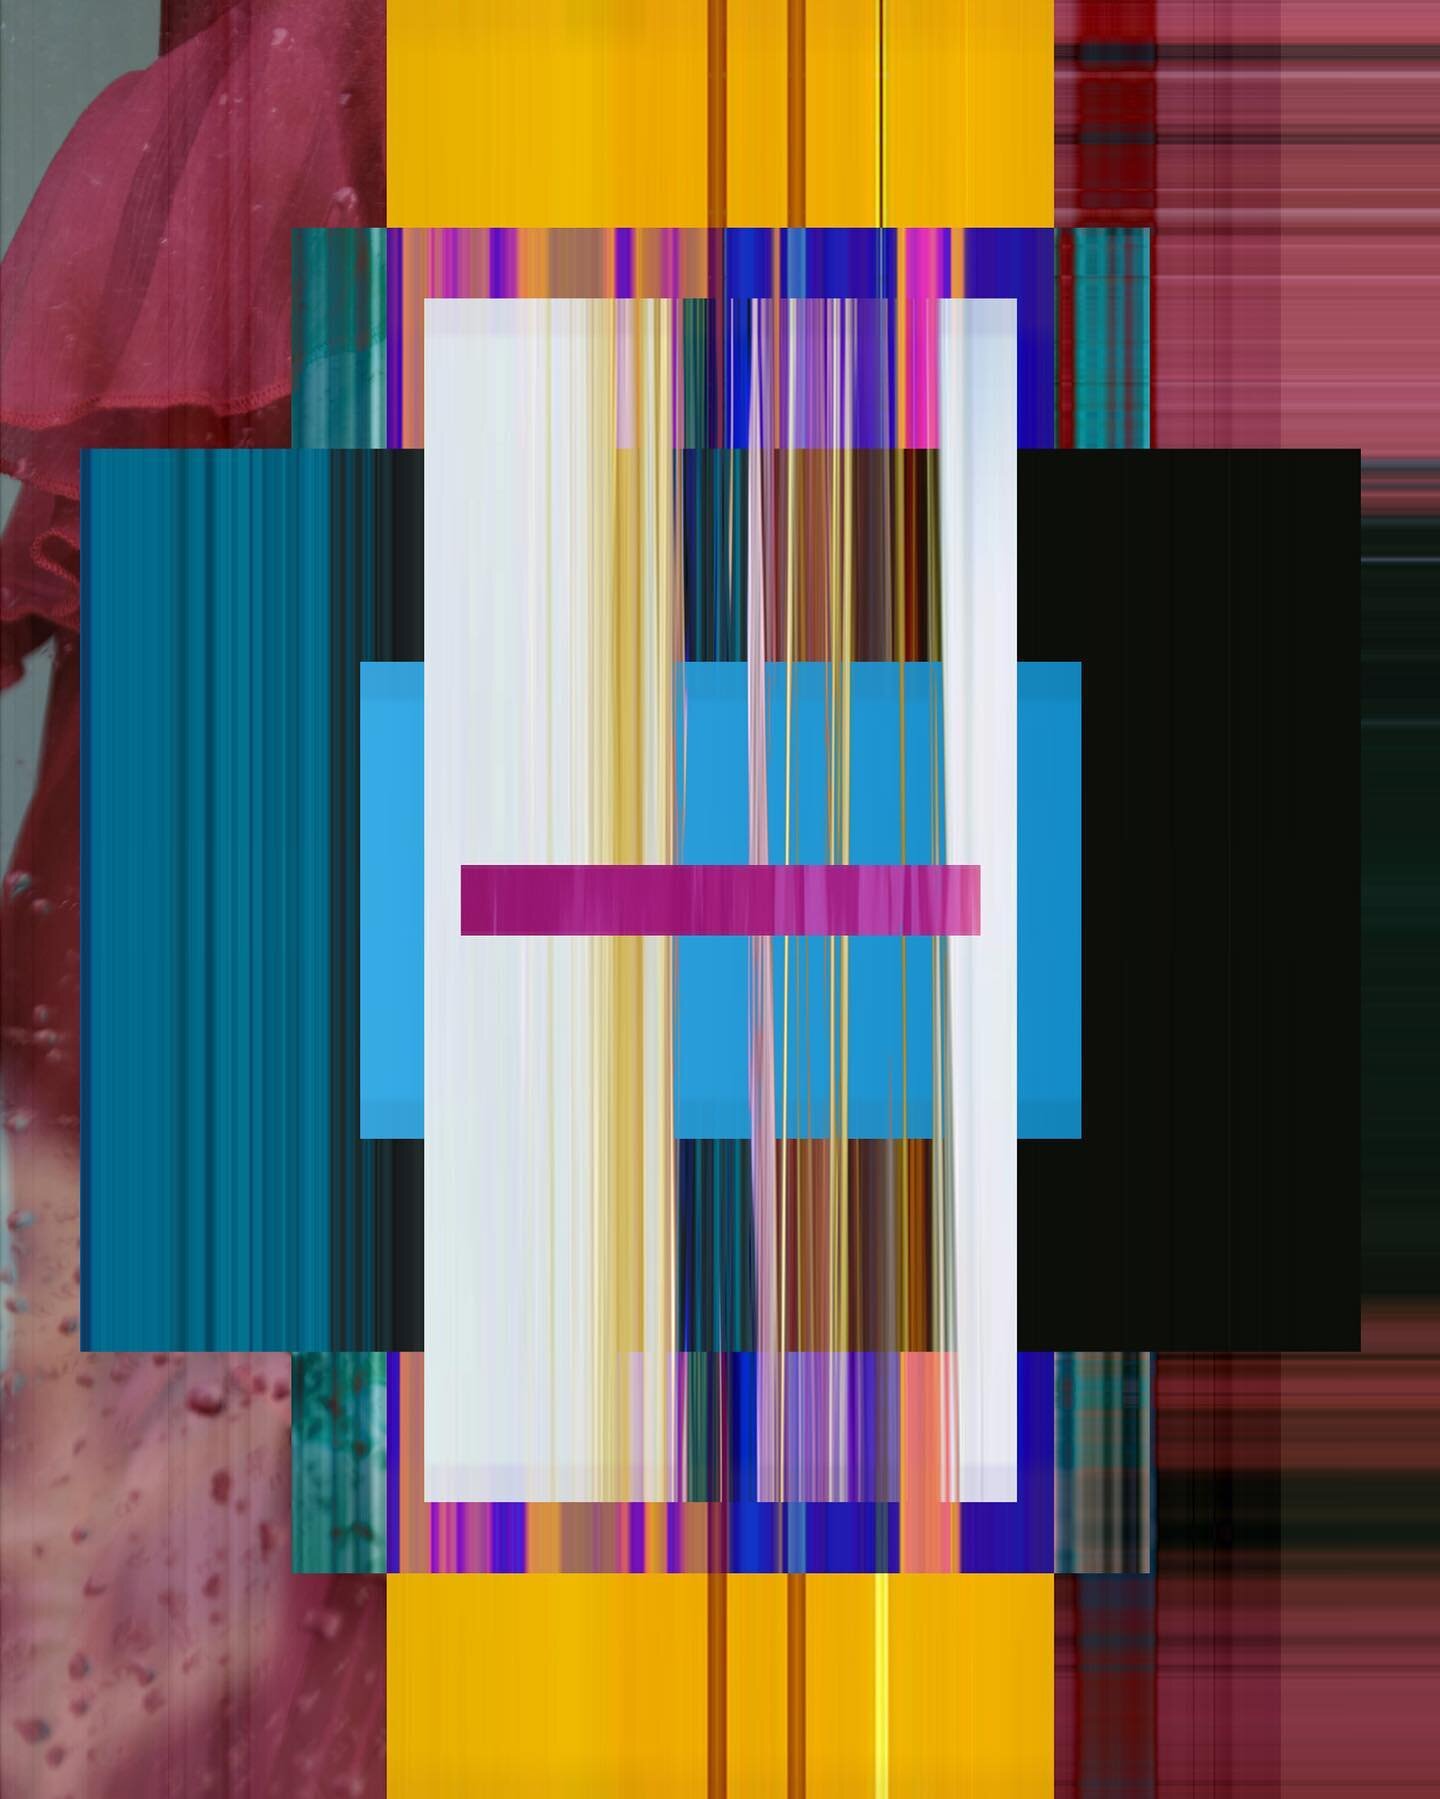 Data Composition 011
Toru Izumida﻿
[2020]﻿
﻿
﻿
﻿
─────────────────﻿
#toruizumida #visualart #visualartist #artwork #art #artist #abstract #abstractart #digitalart #digitalartist #graphicdesign #graphic #photography #newmediaart #newmediaartist #conte